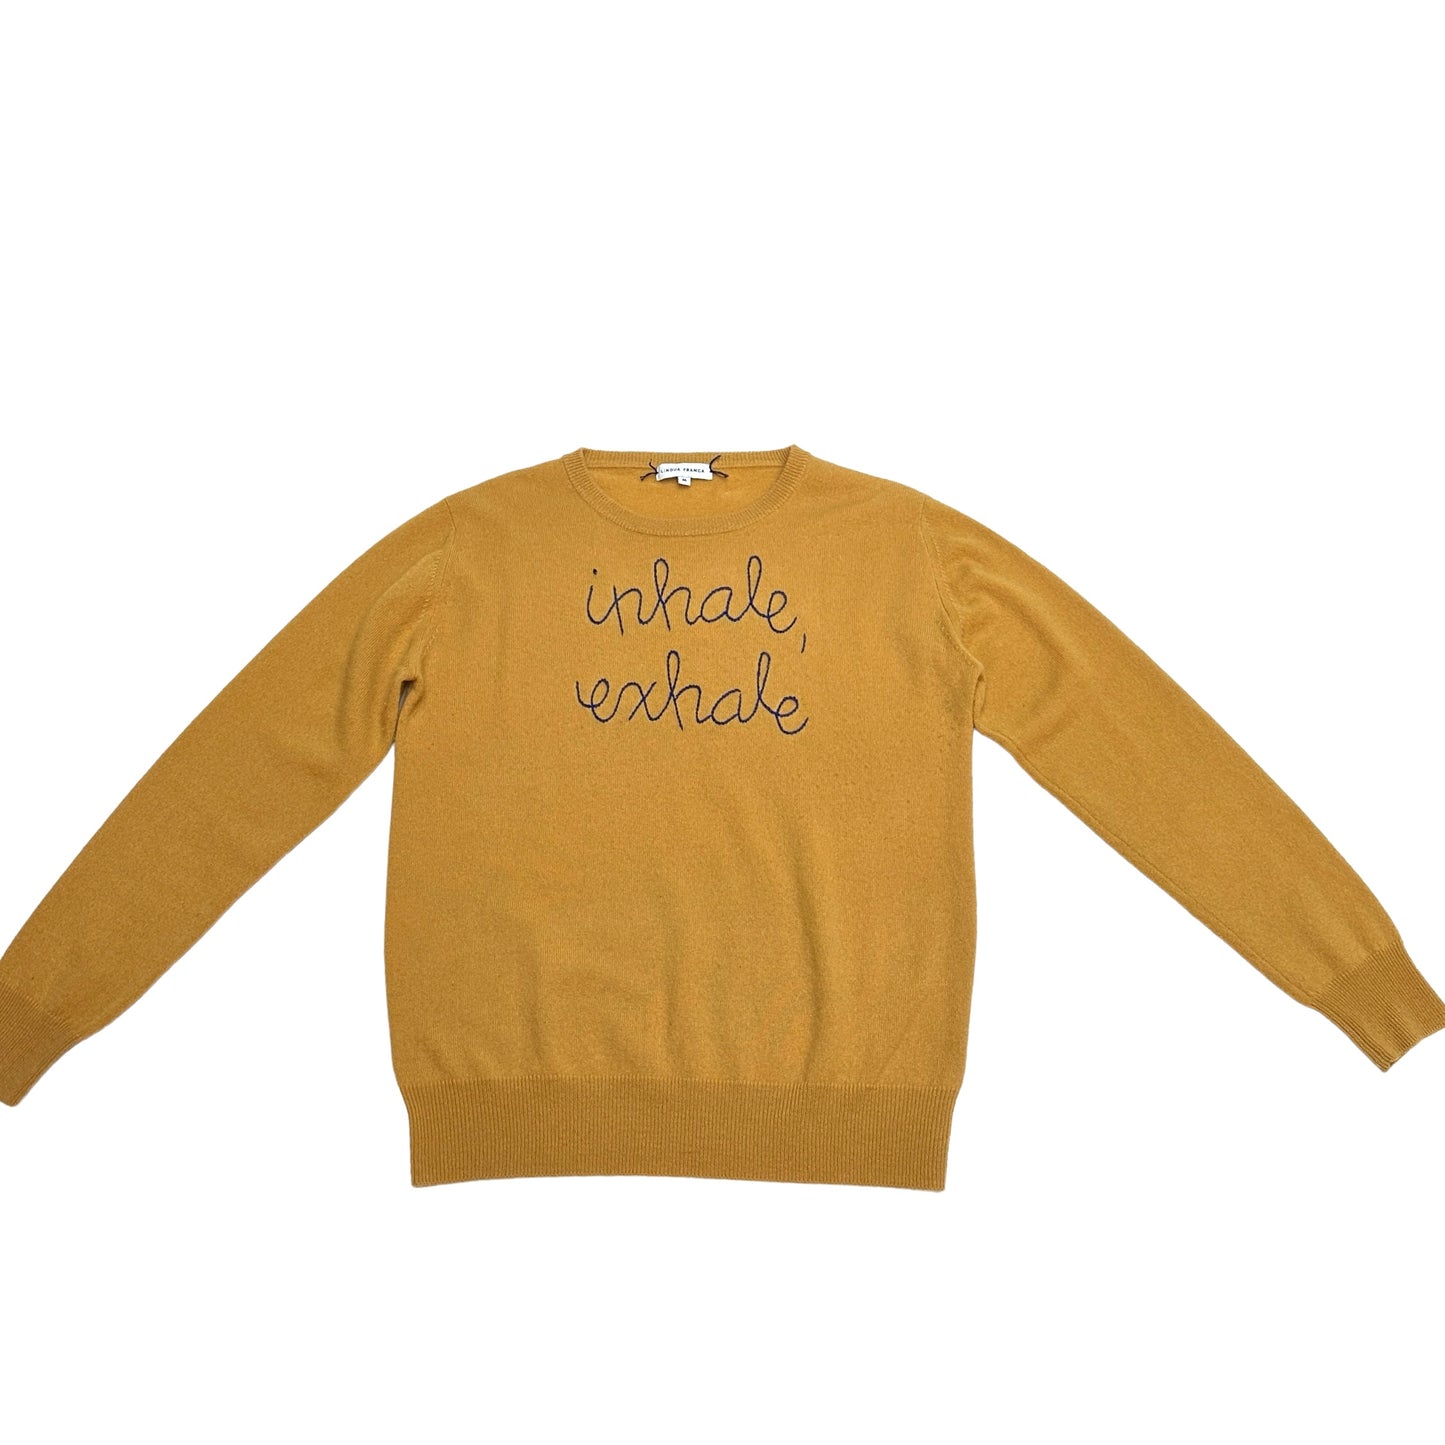 Yellow Cashmere Sweater - M